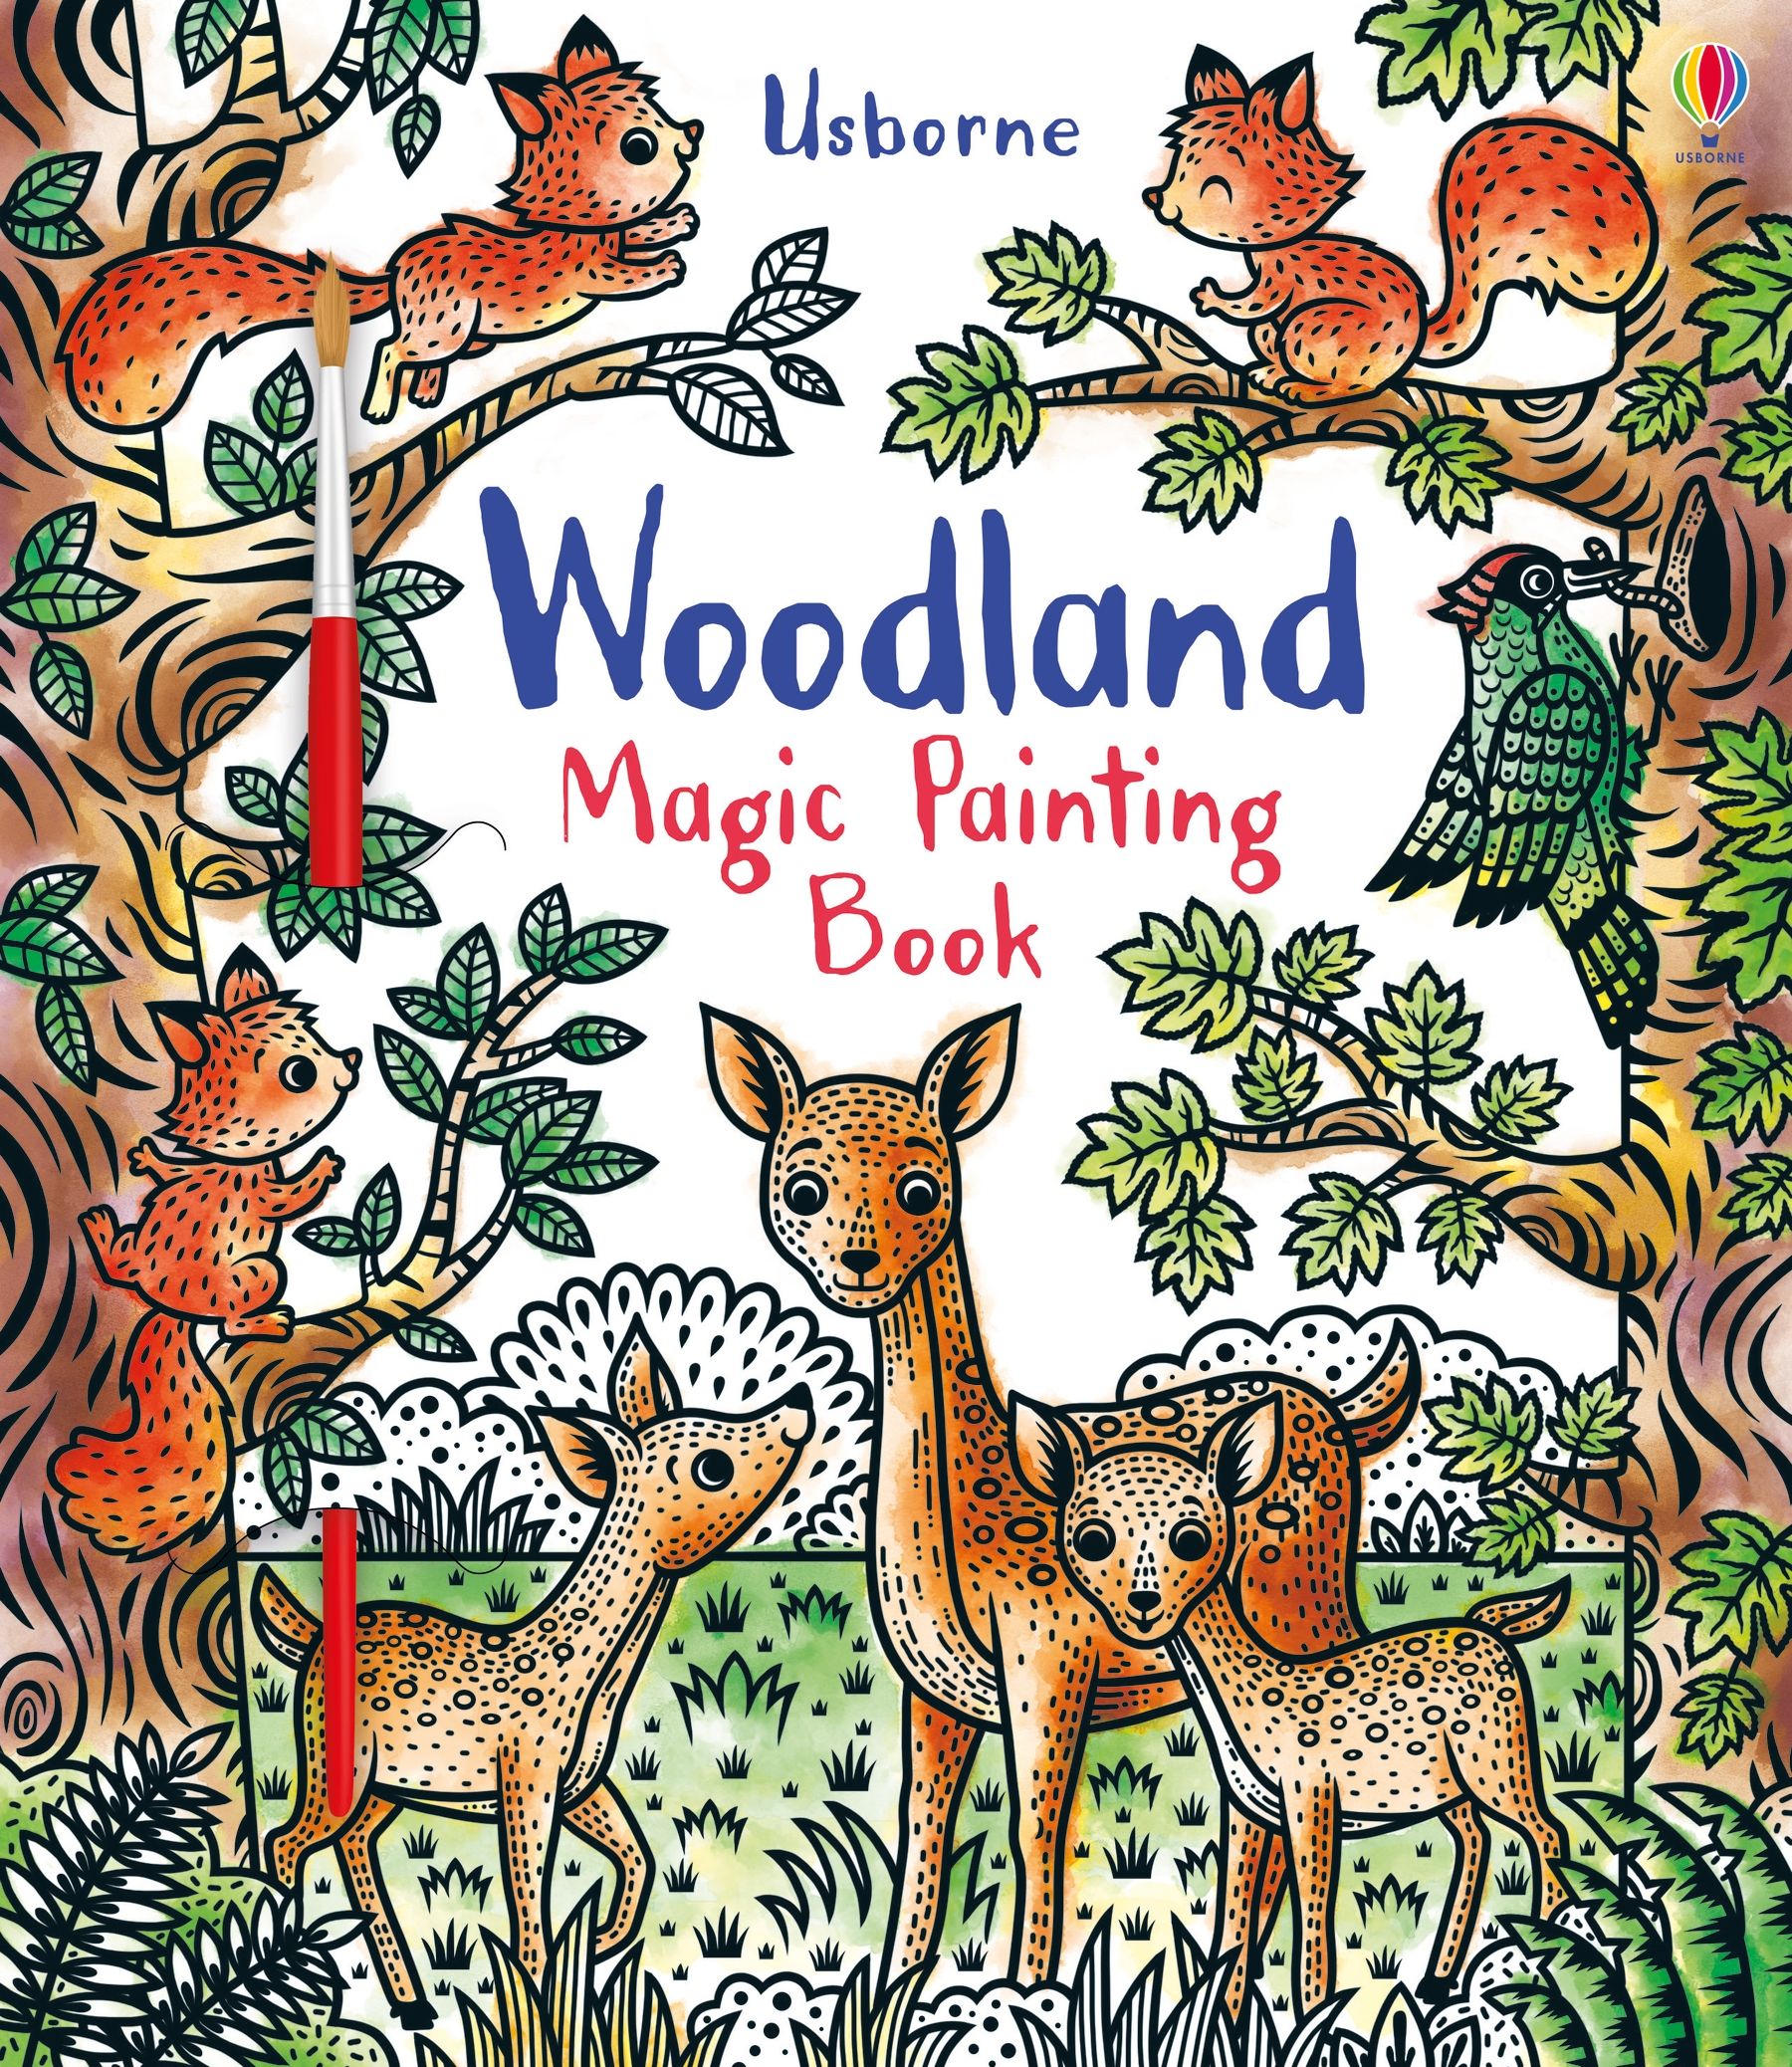 Usborne Books | Magic Painting Book - Woodland